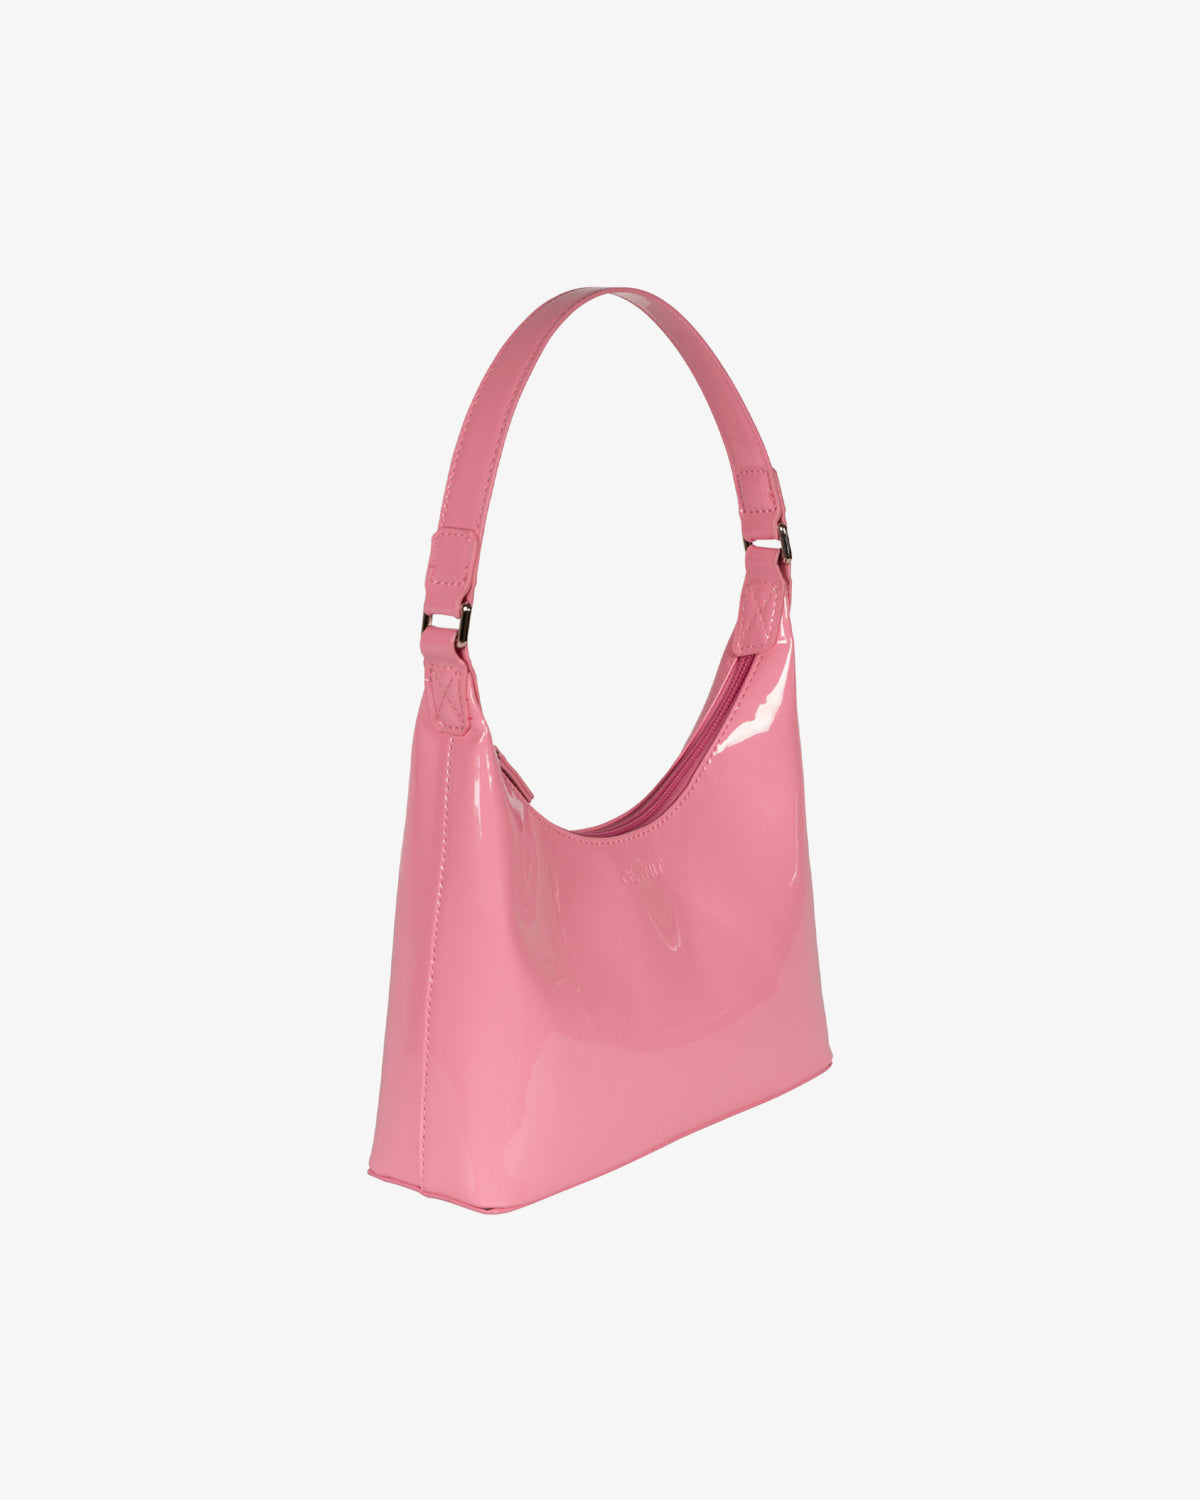 Molly Bag - True Pink